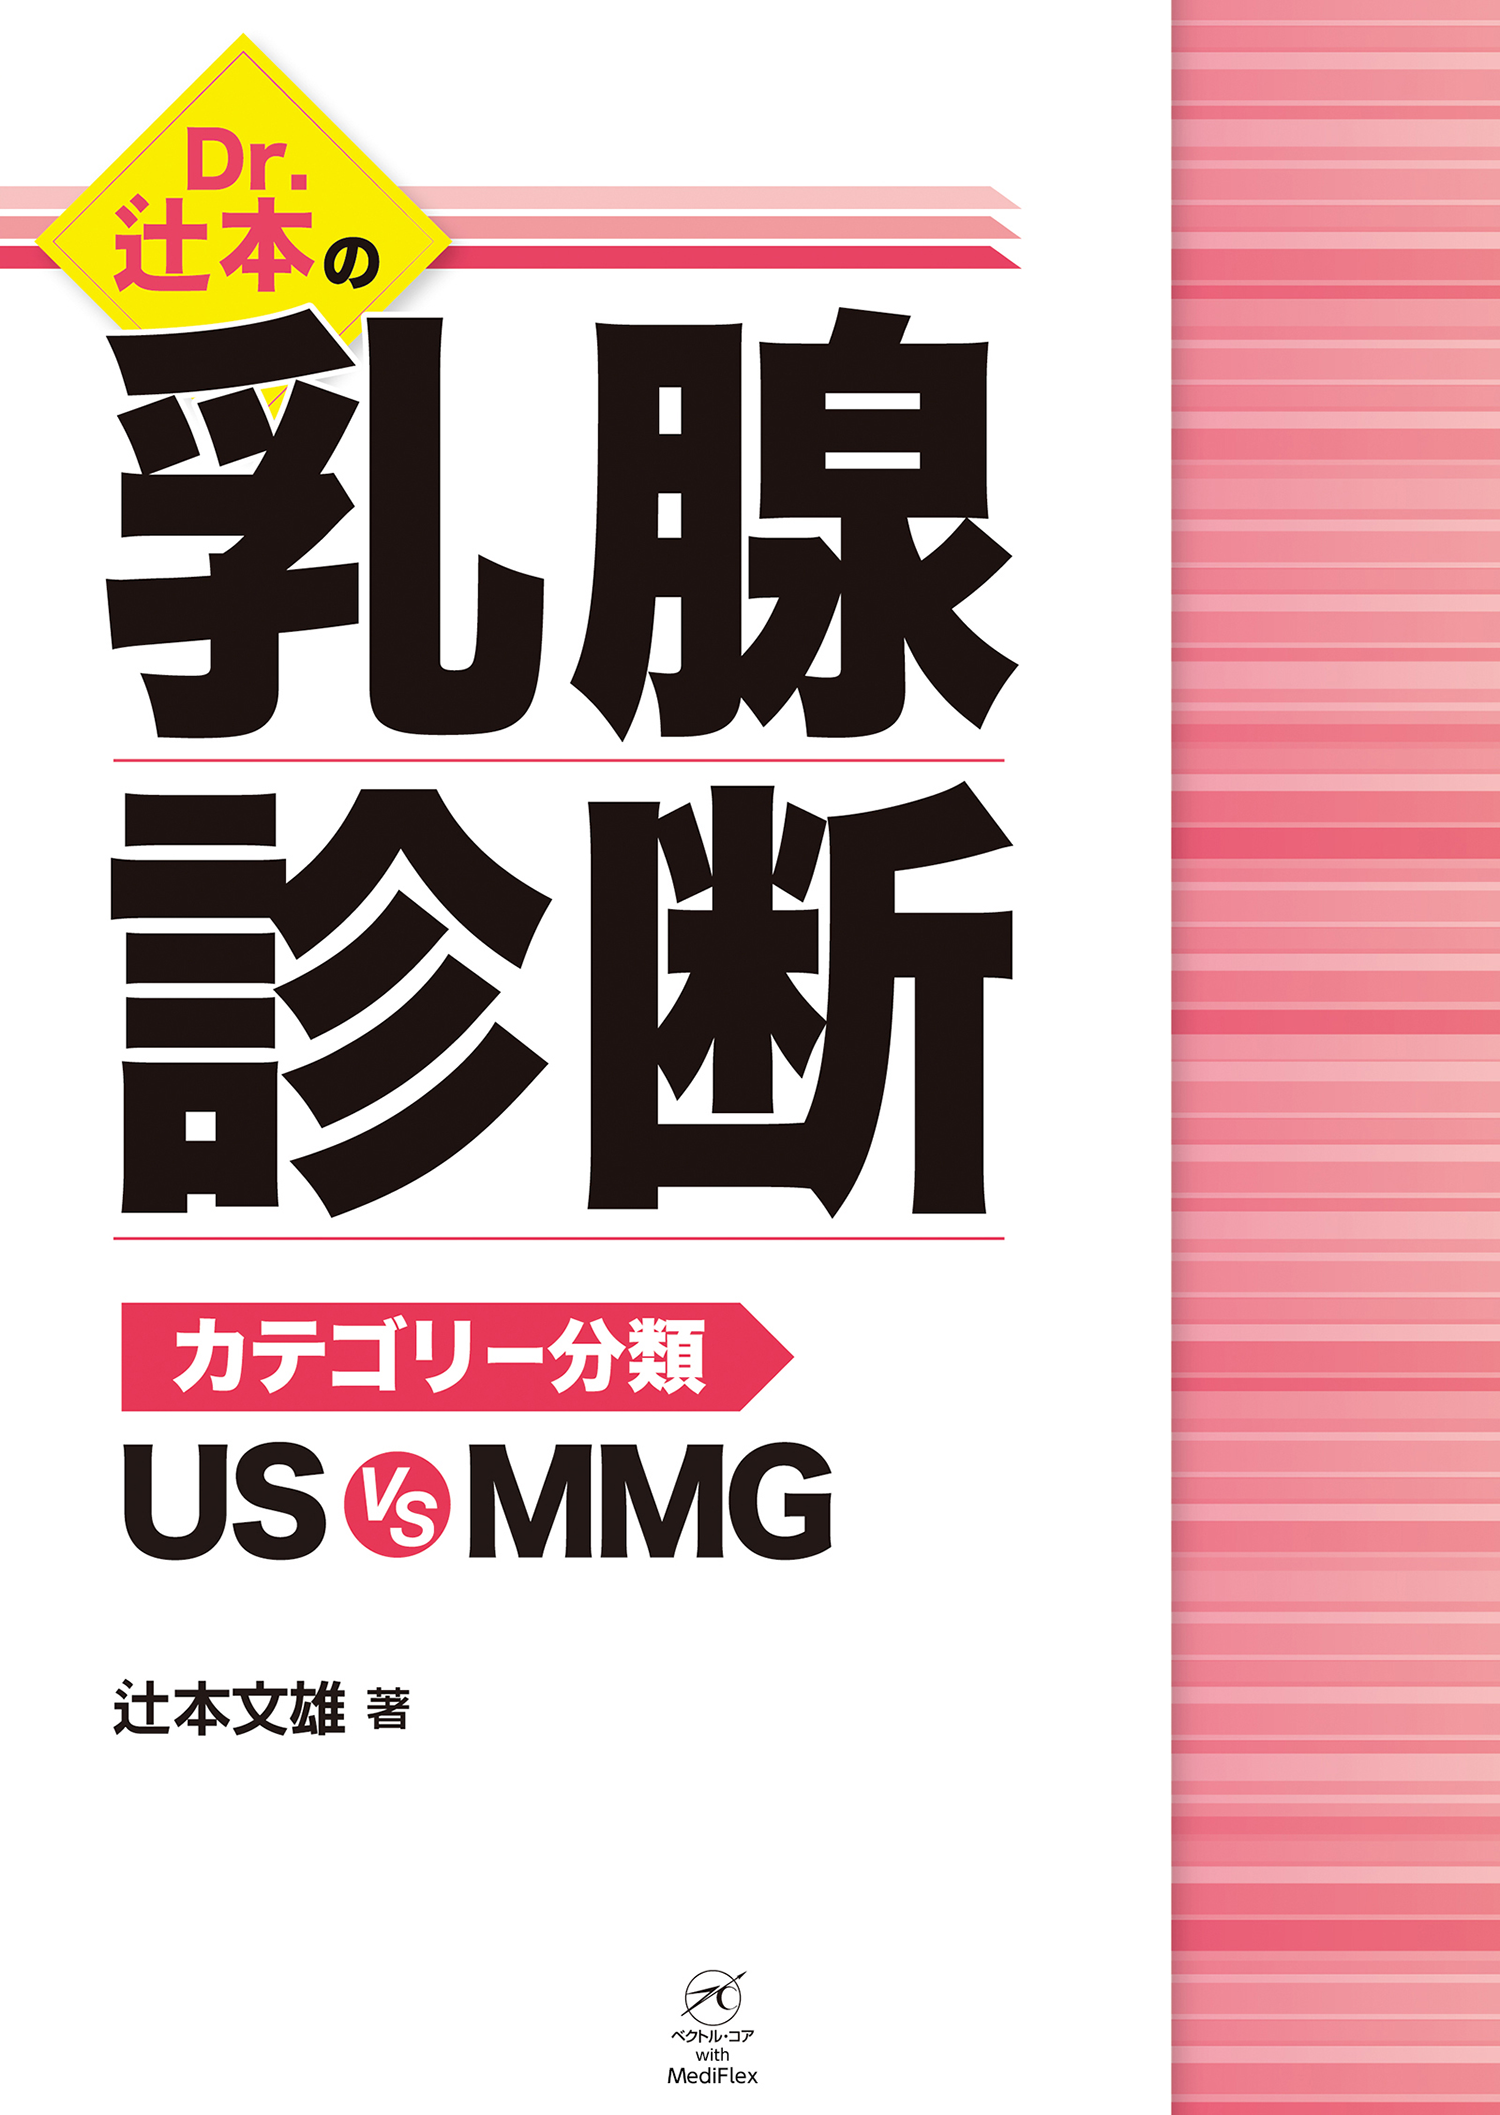 Dr.辻本の乳腺診断 カテゴリー分類 US vs MMG